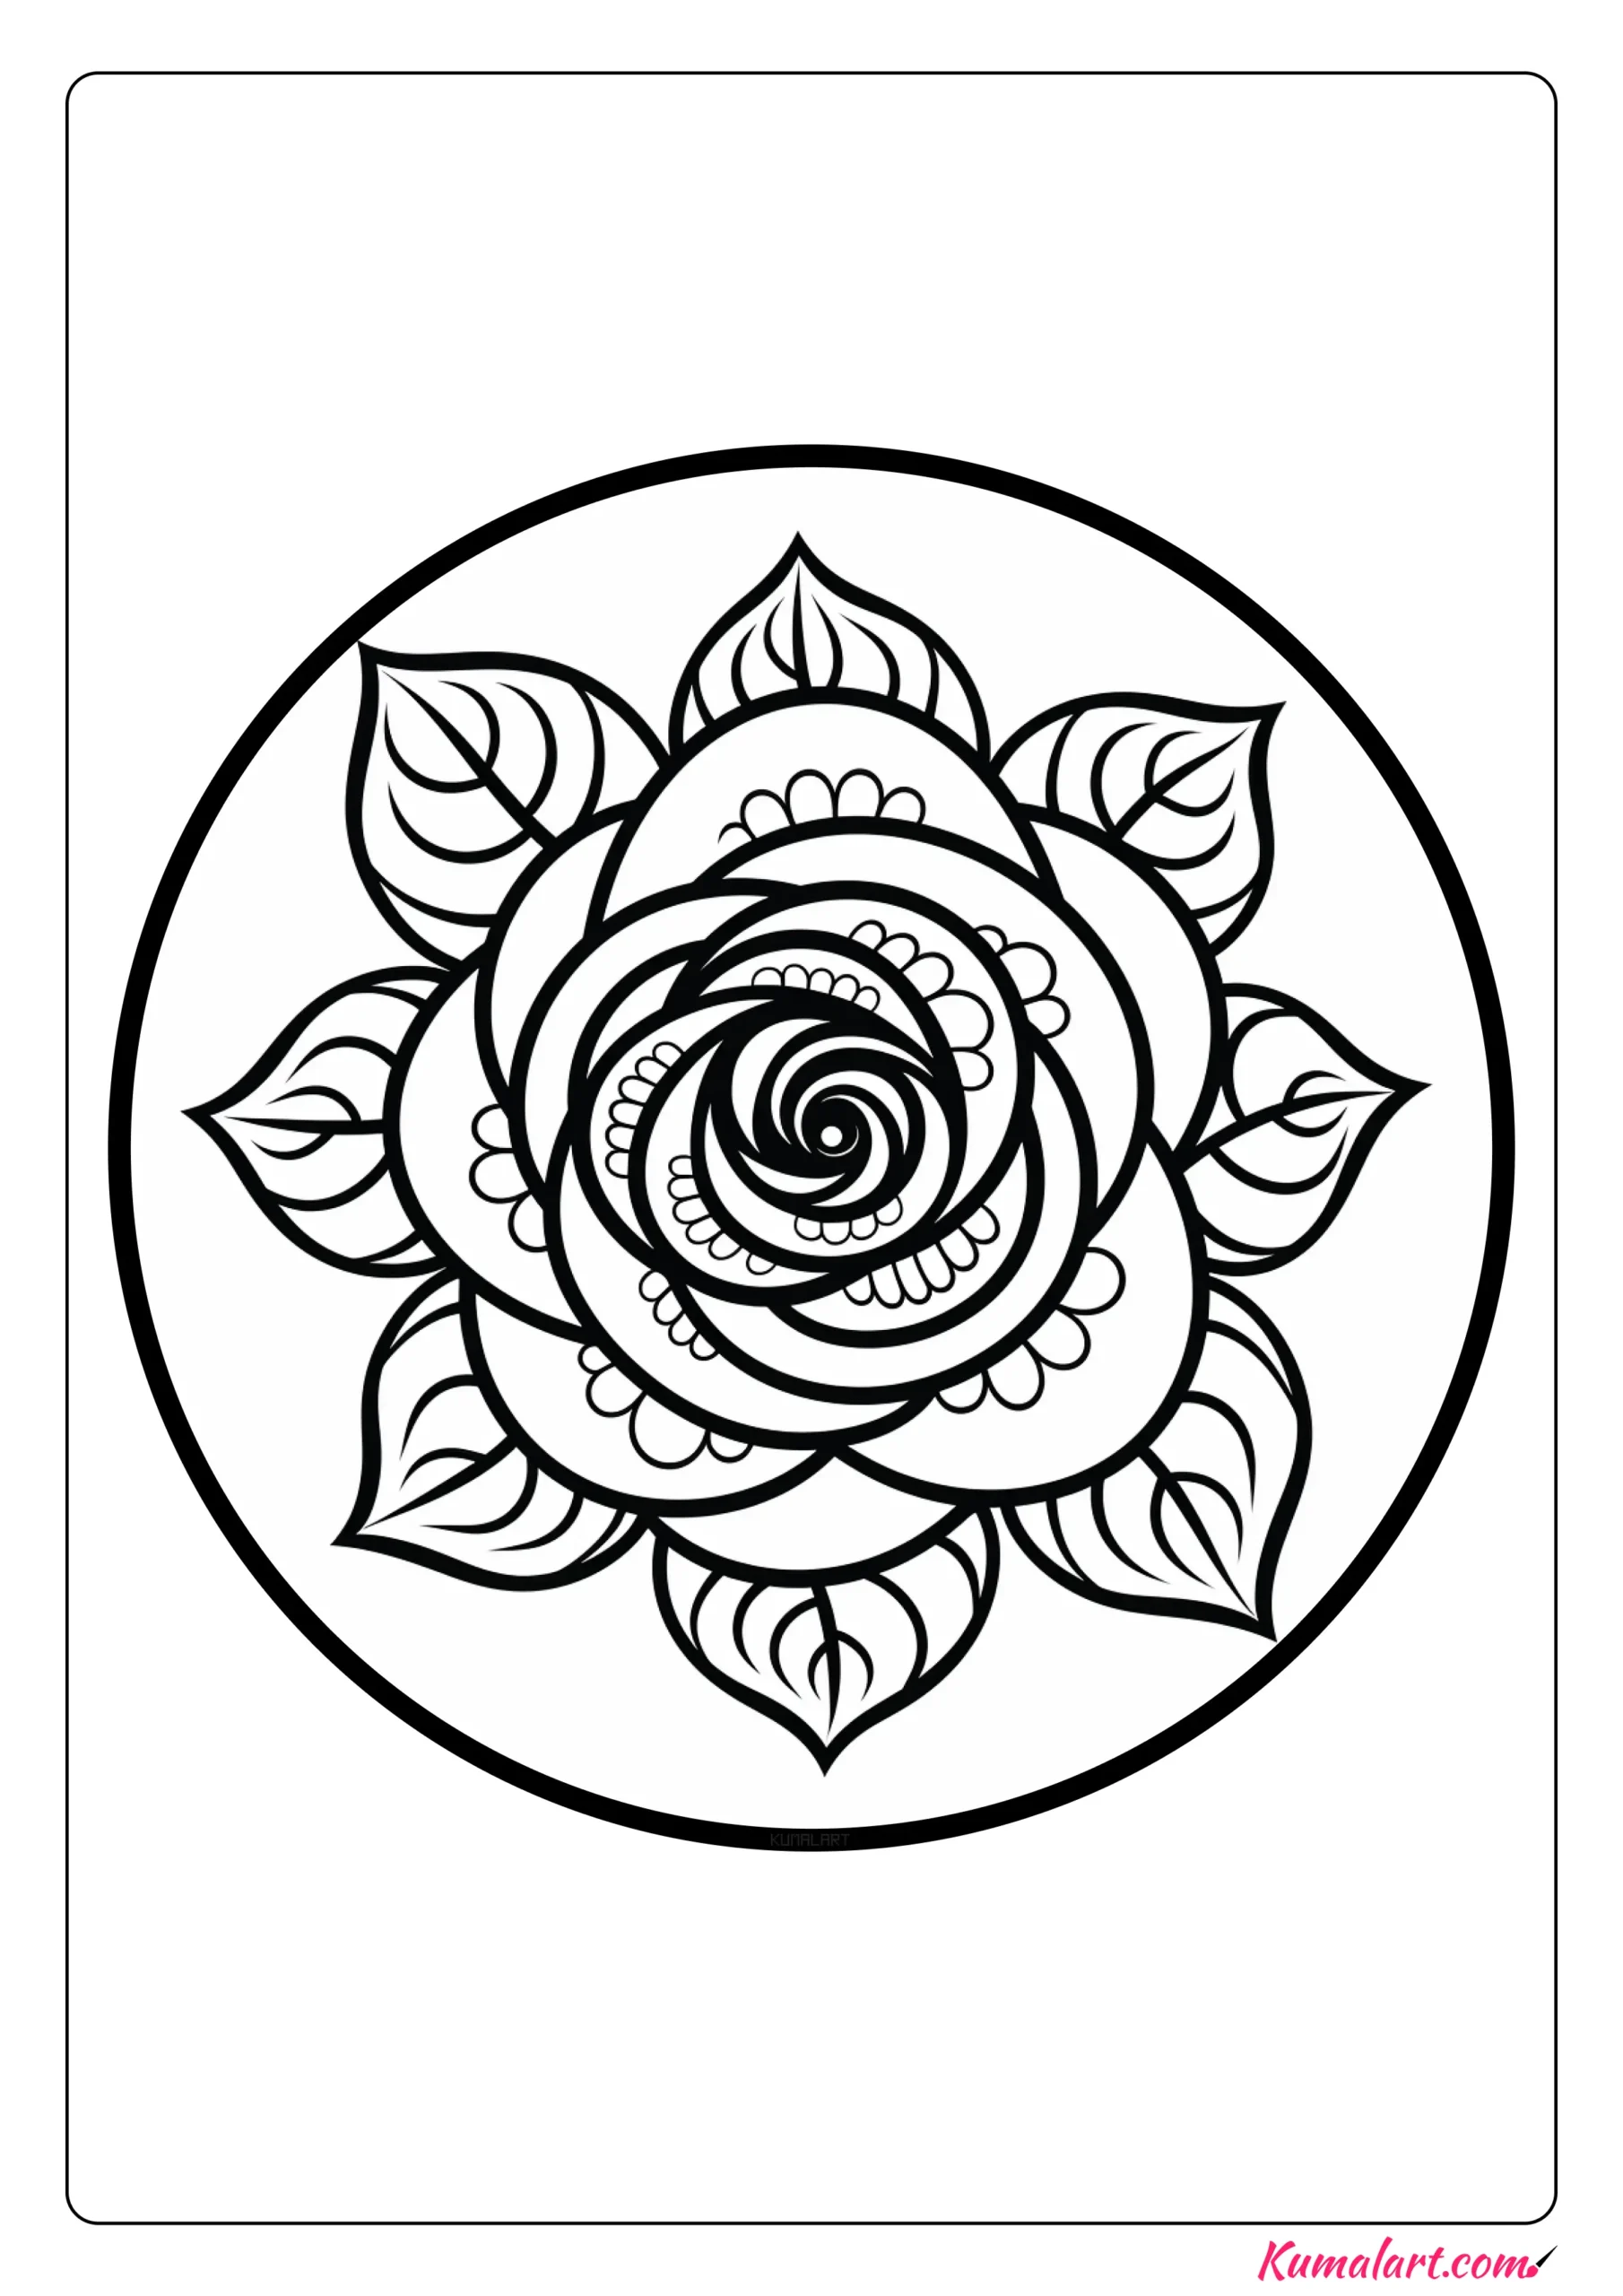 Beautiful Rose Mandala Coloring Page